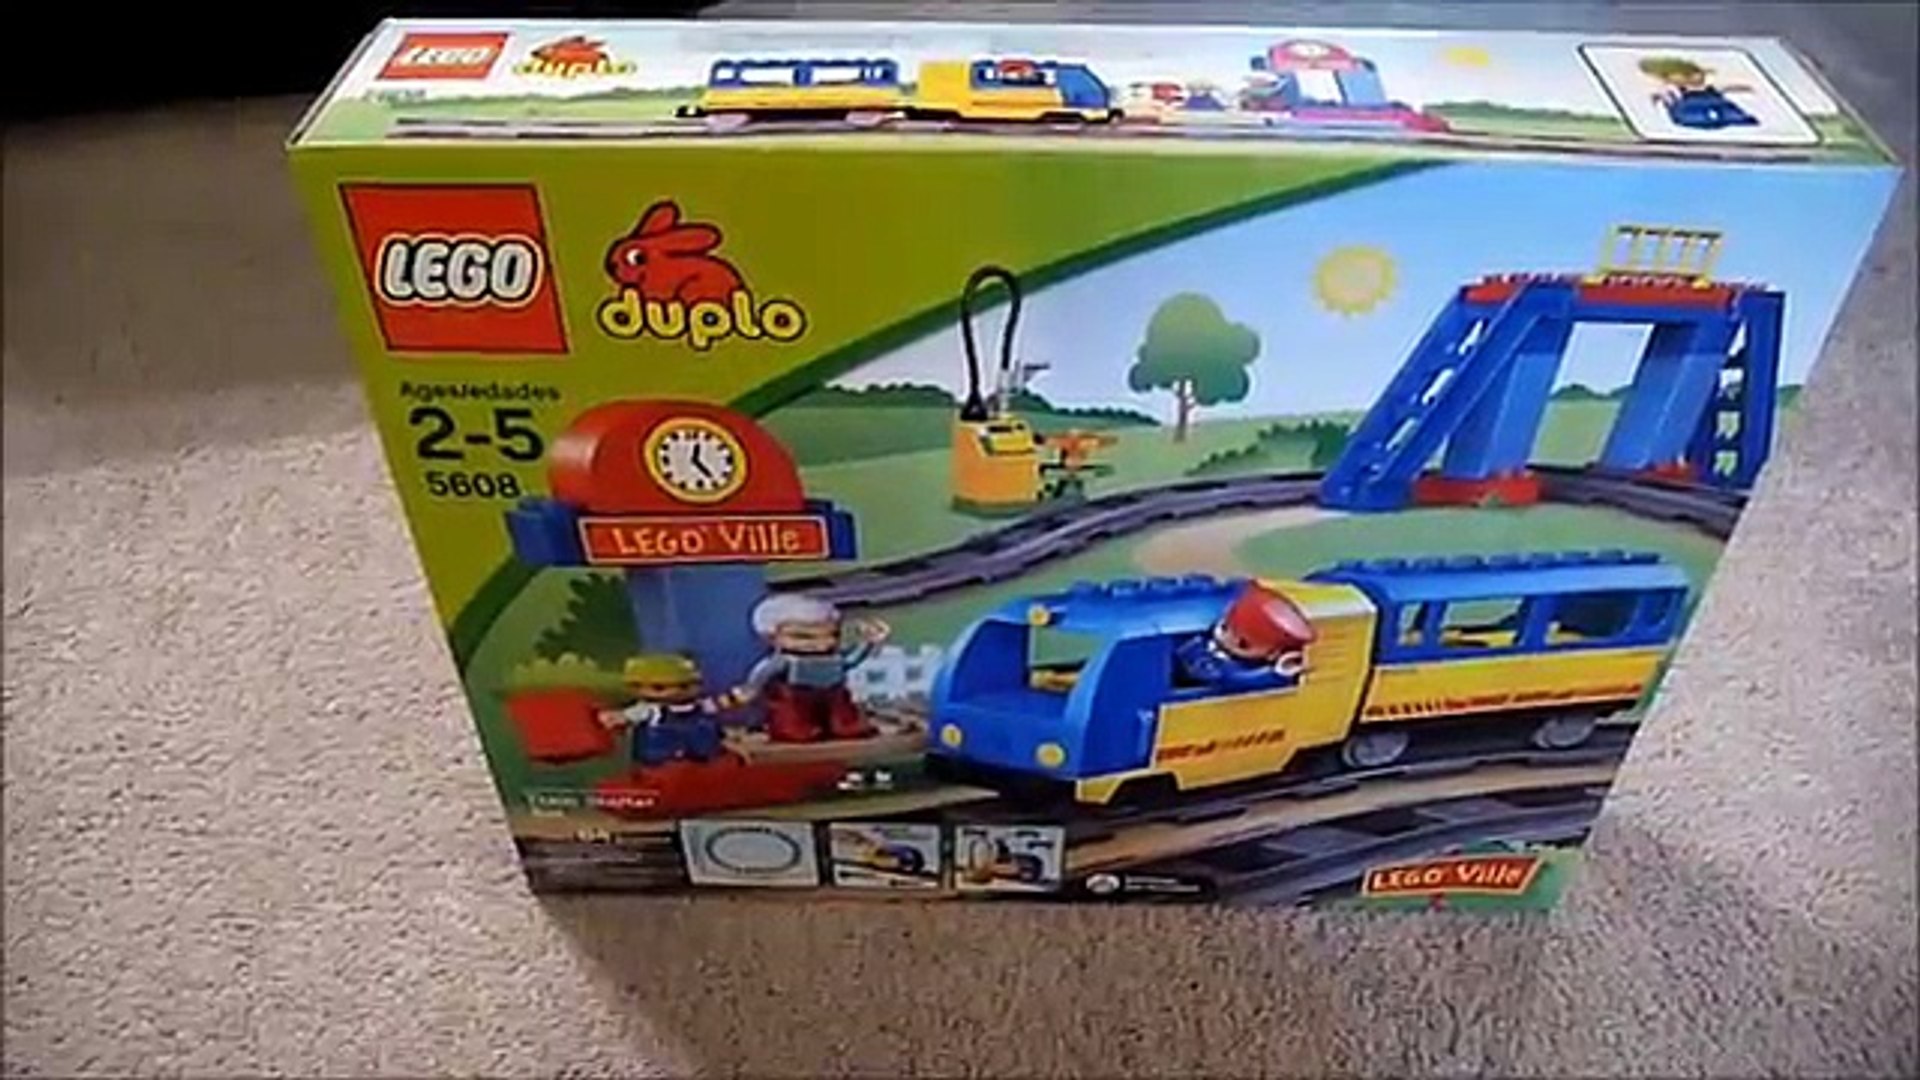 LEGO Duplo 5608 Train Starter Set - Battery operated passenger train -  video Dailymotion